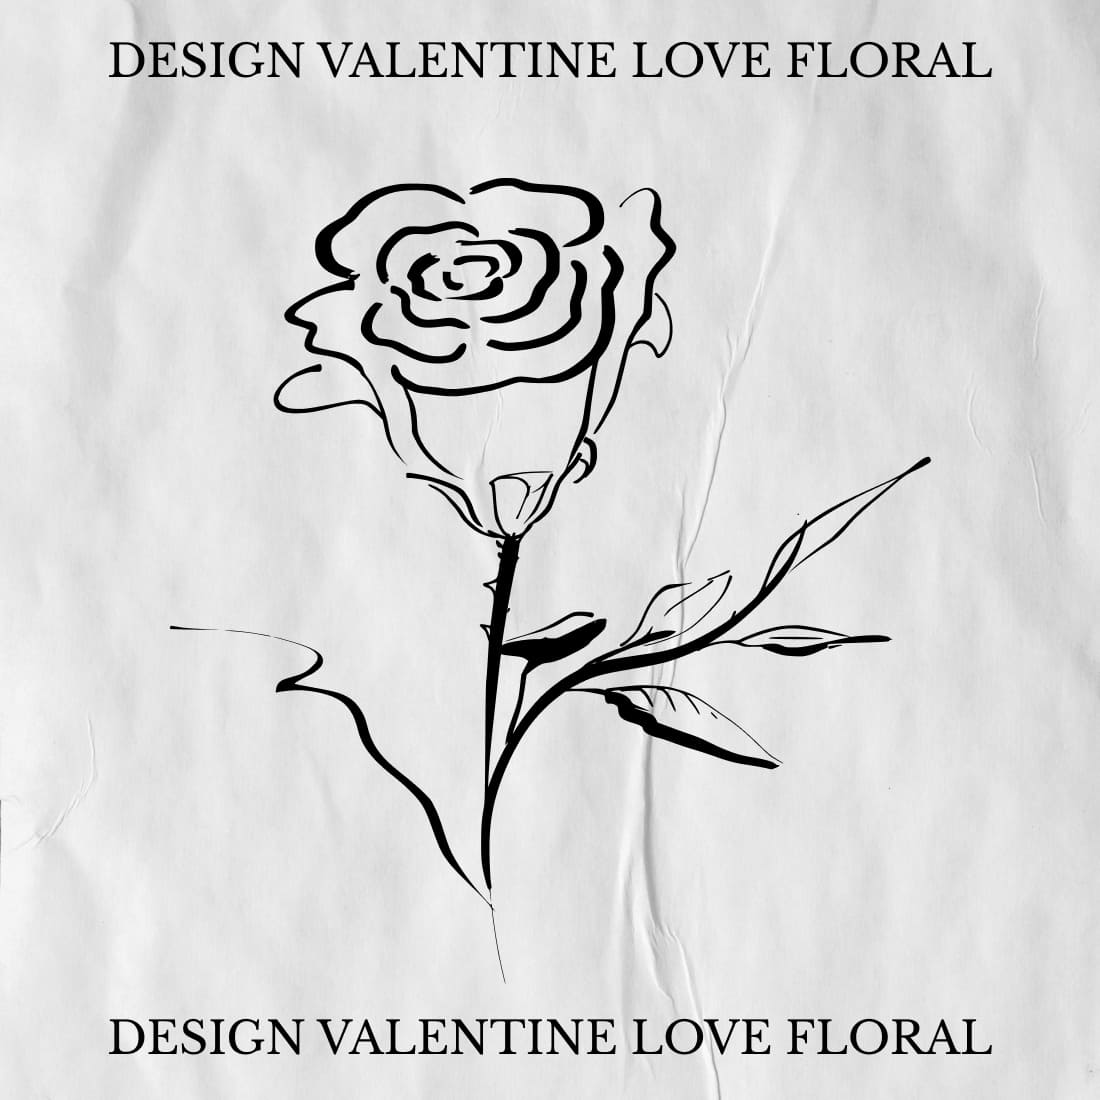 design valentine love floral cover